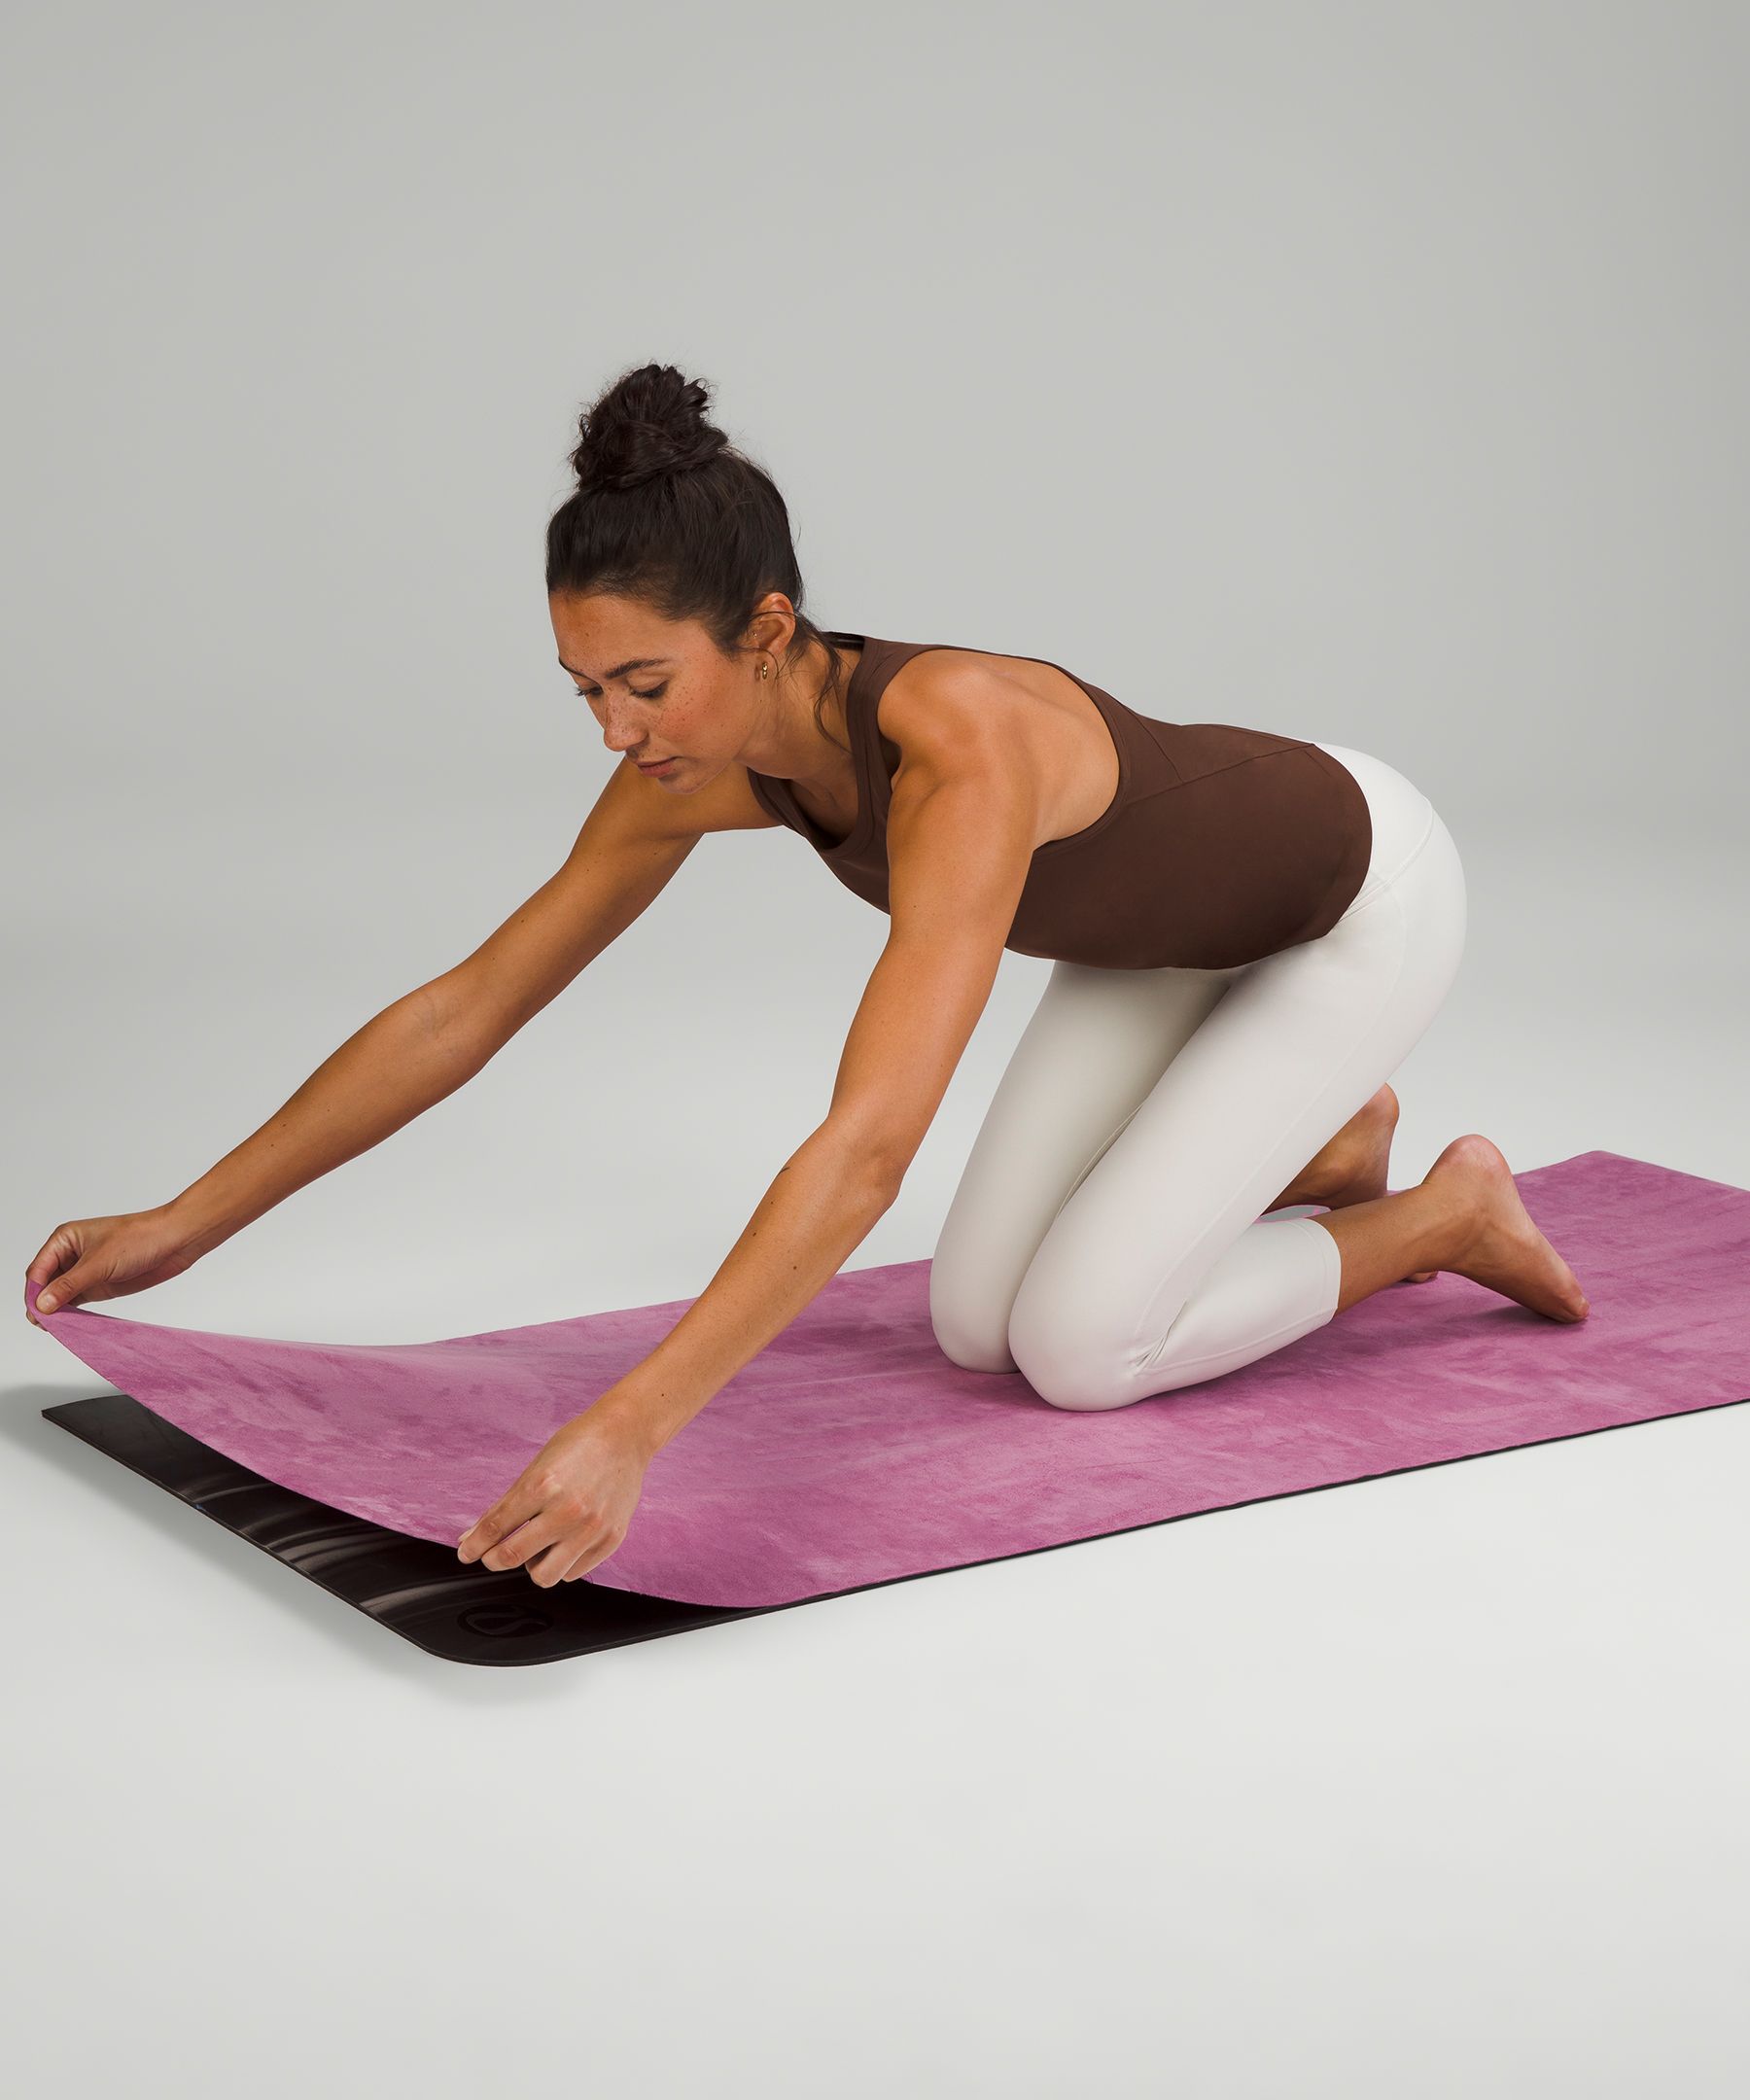 OVsler Yoga Towel Yoga Towel For Hot Yoga Yoga Mat Non Slip Yoga Towels For  Hot Yoga Yoga Blanket Yoga Towel Mat Hot Yoga Towel Mat Towel Yoga Mat